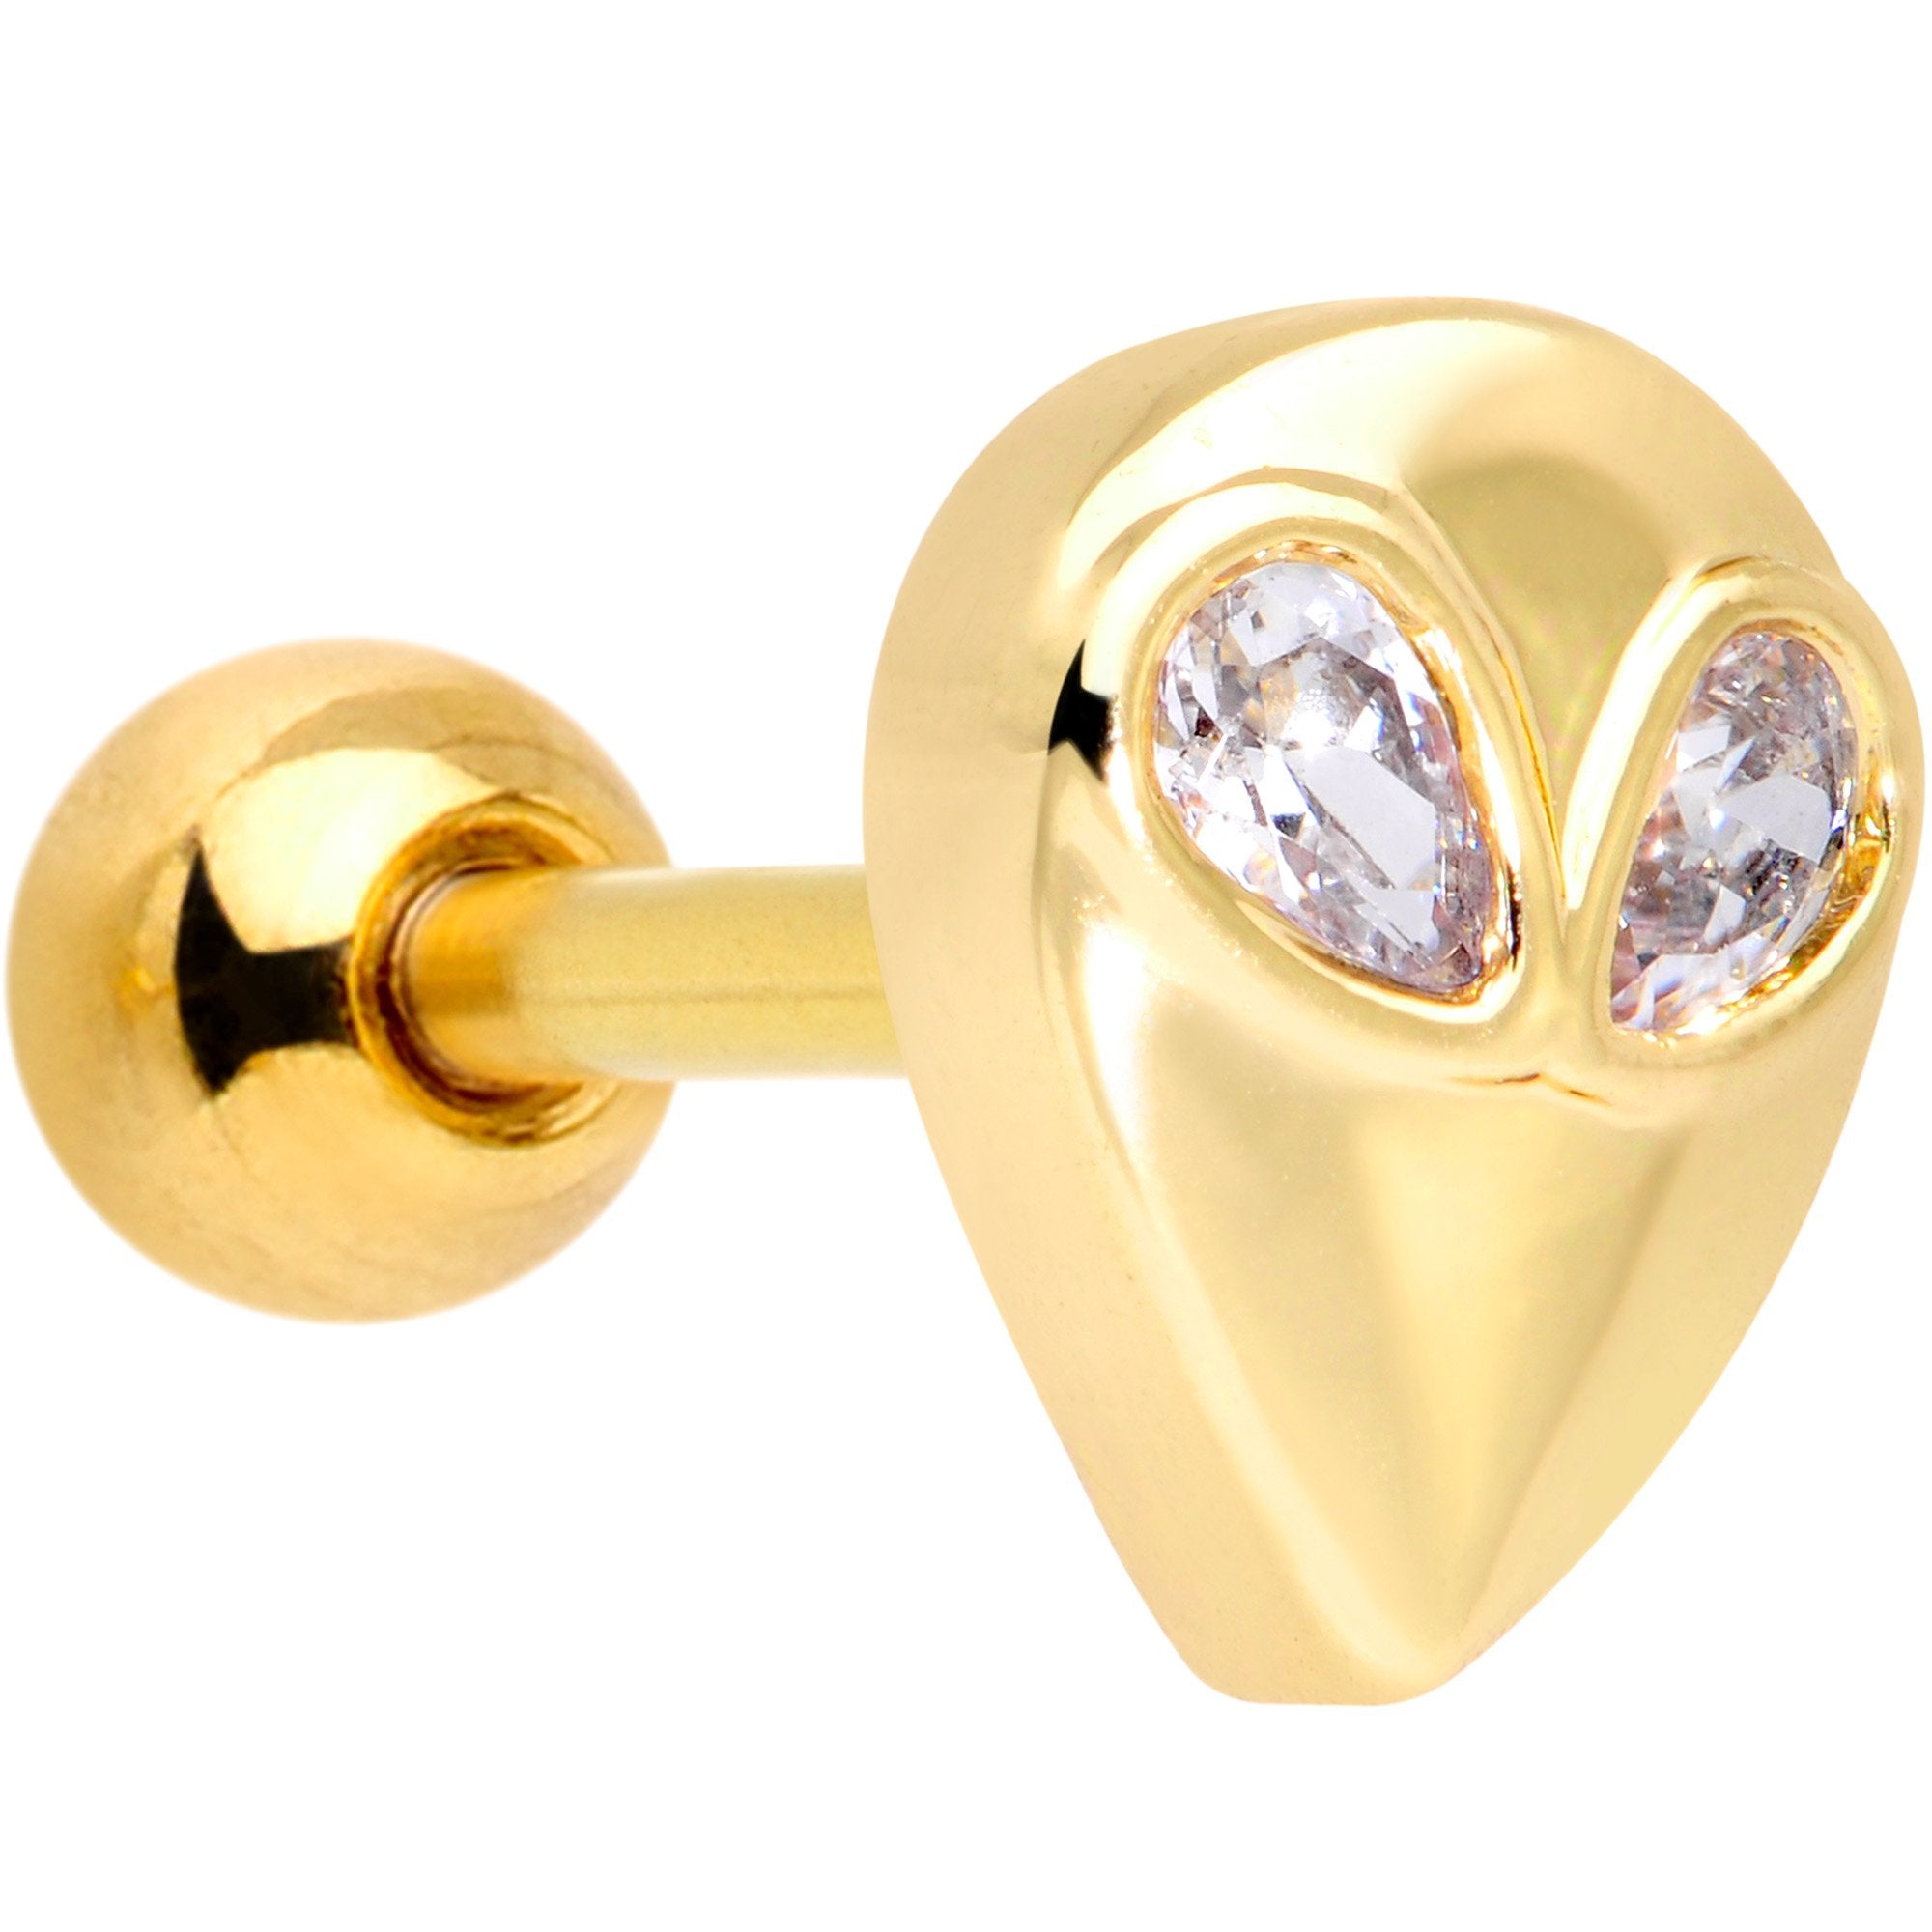 16 Gauge 1/4 Clear Gem Gold Tone Space Alien Cartilage Tragus Earring